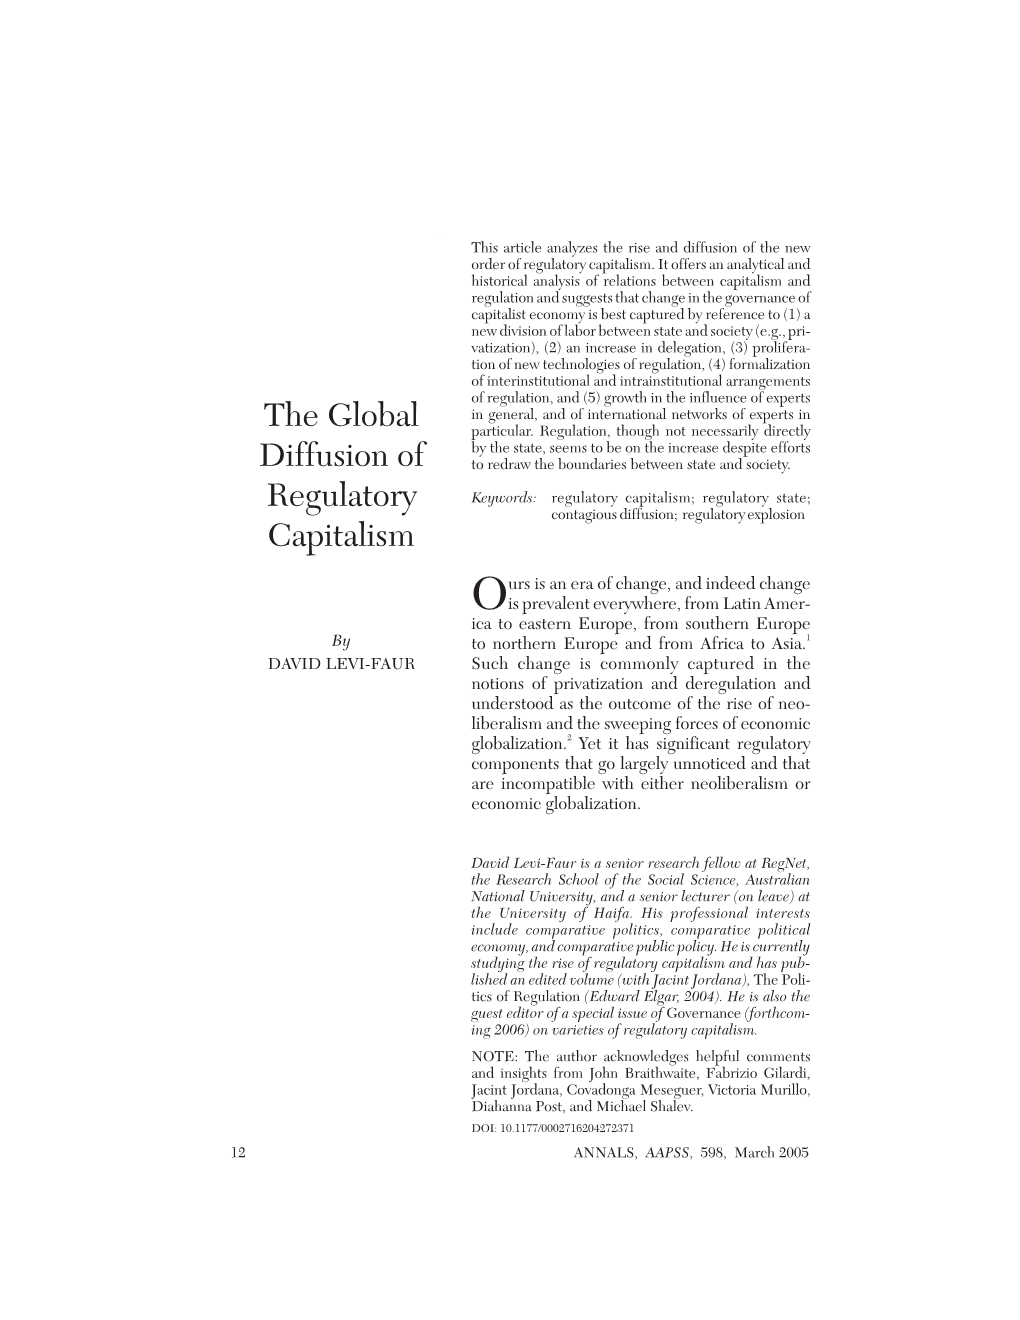 The Global Diffusion of Regulatory Capitalism 13